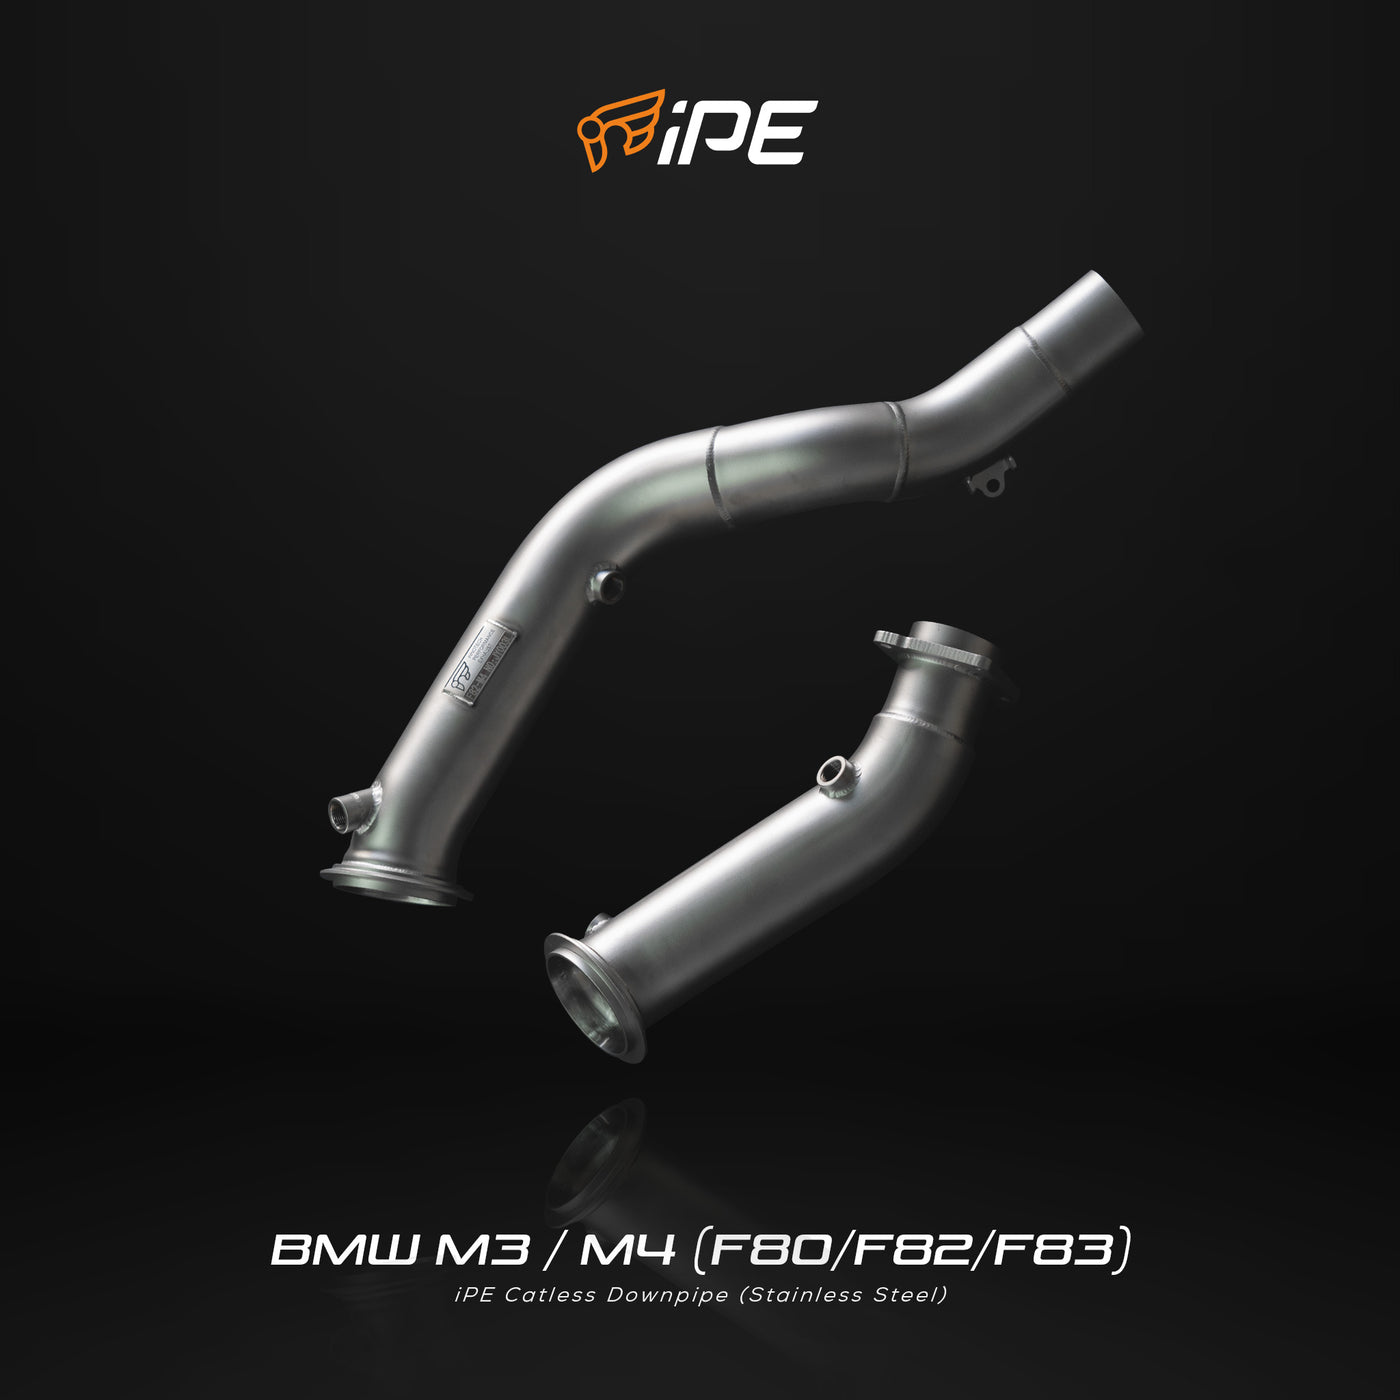 BMW M3 / M4 (F80/F82/F83) Exhaust System